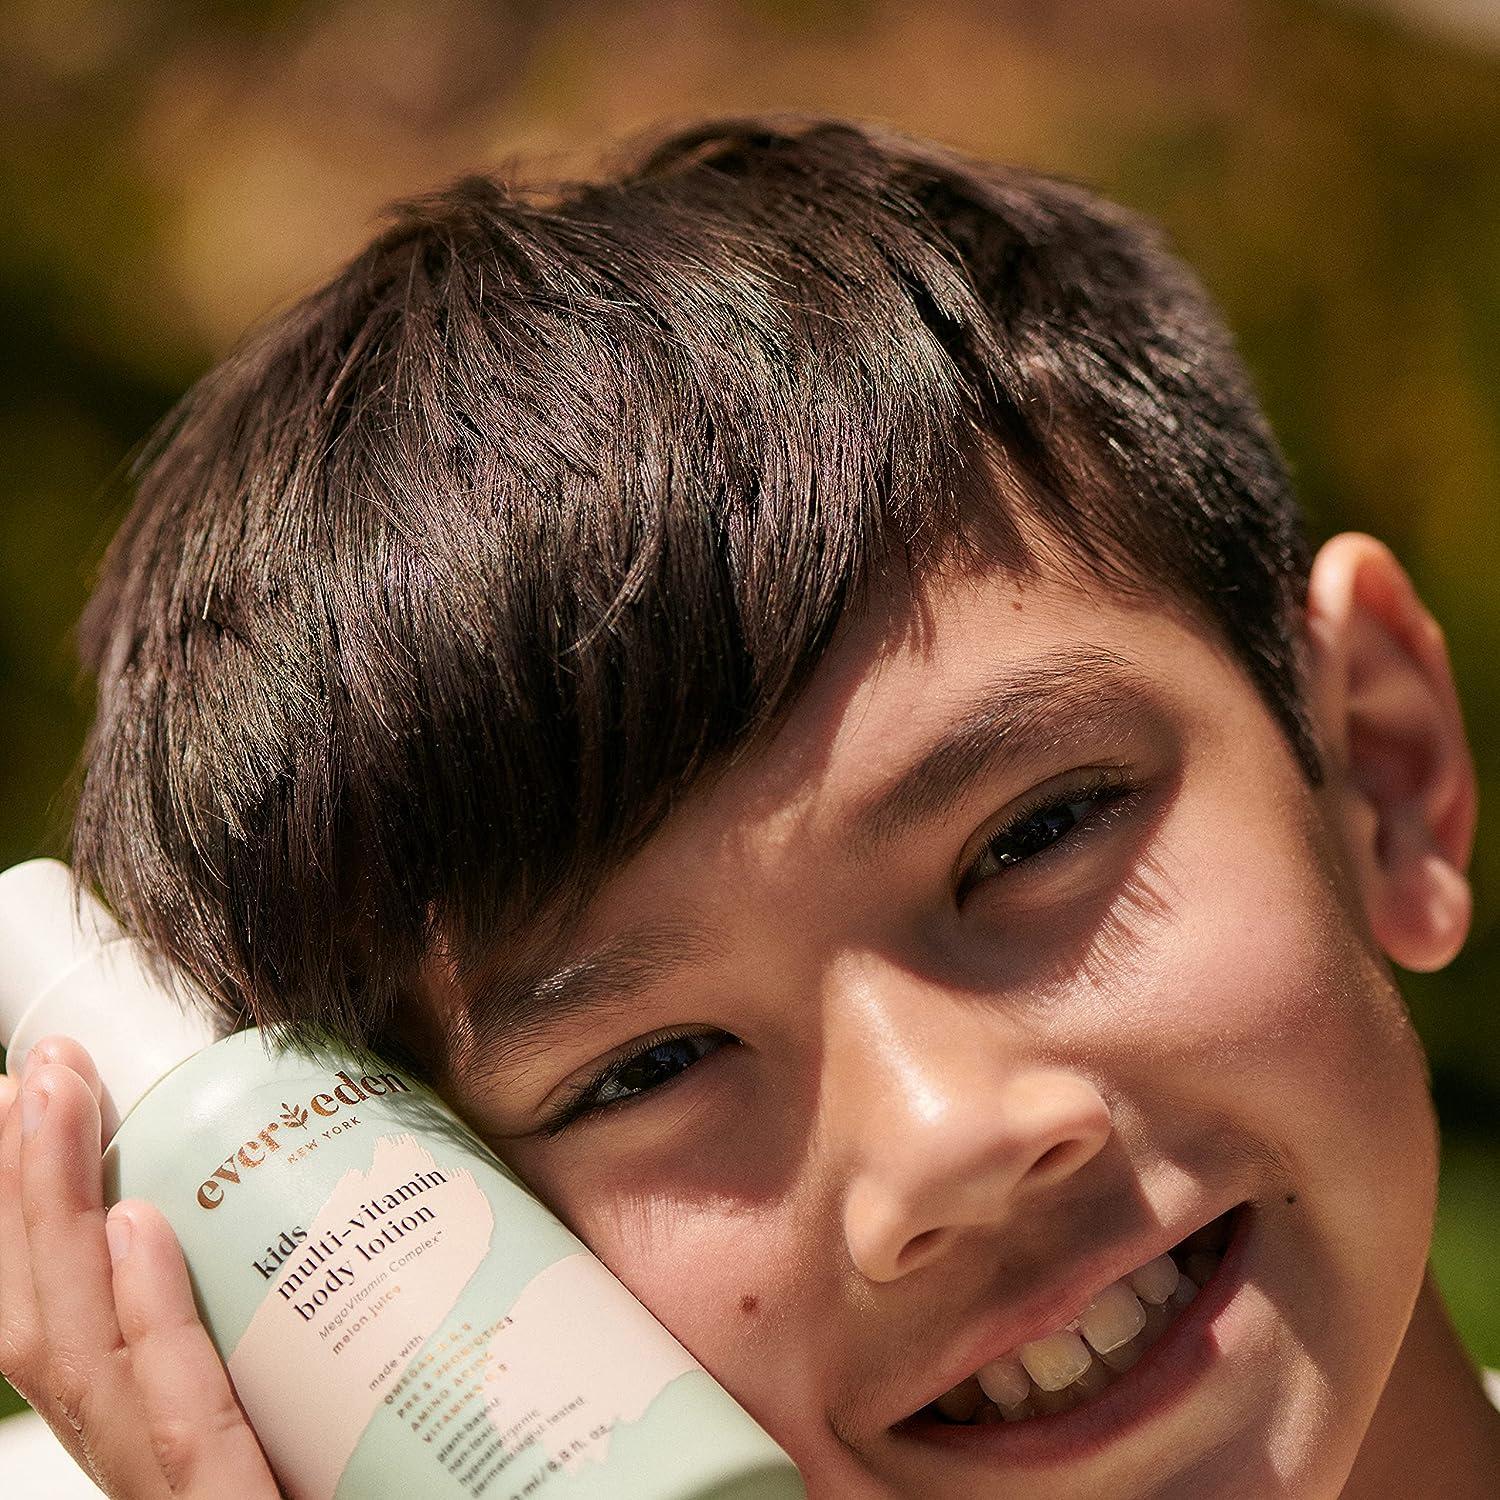 Evereden Kids Face Cream: Melon Juice 1.7 oz, Plant-Based Natural  Non-Toxic